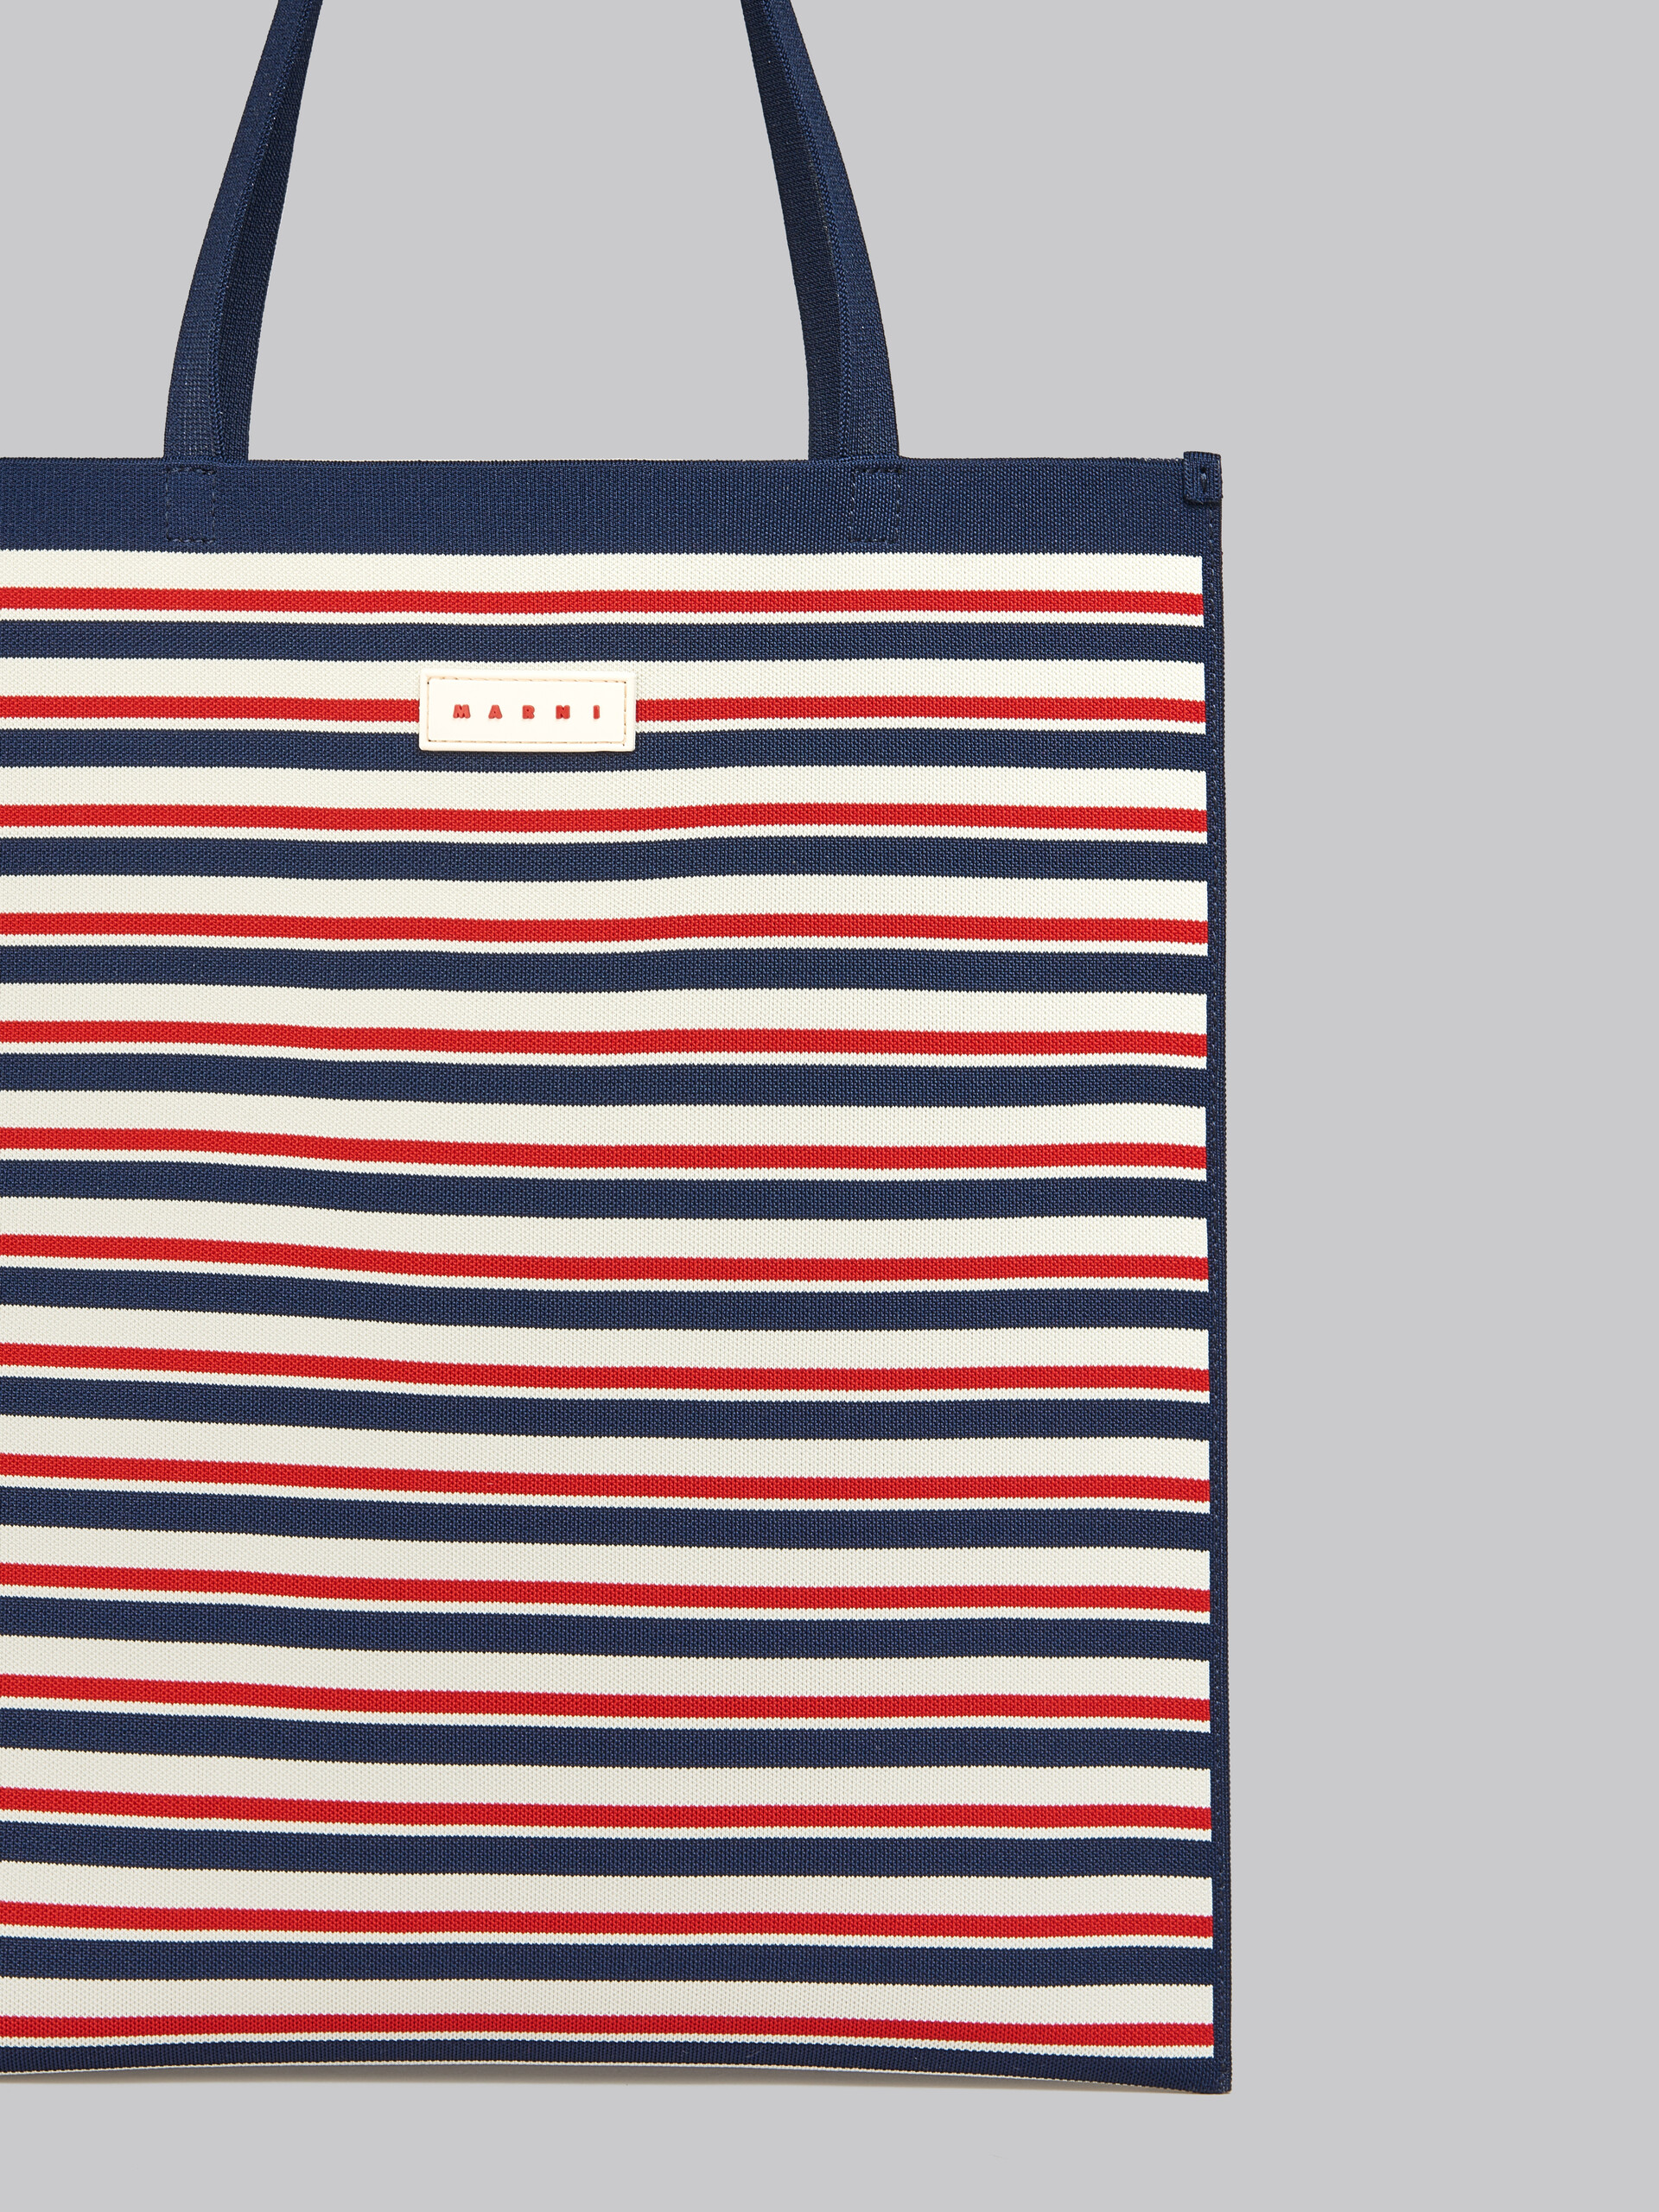 Tote Bag in jacquard a righe blu, bianche e rosse - Borse shopping - Image 5